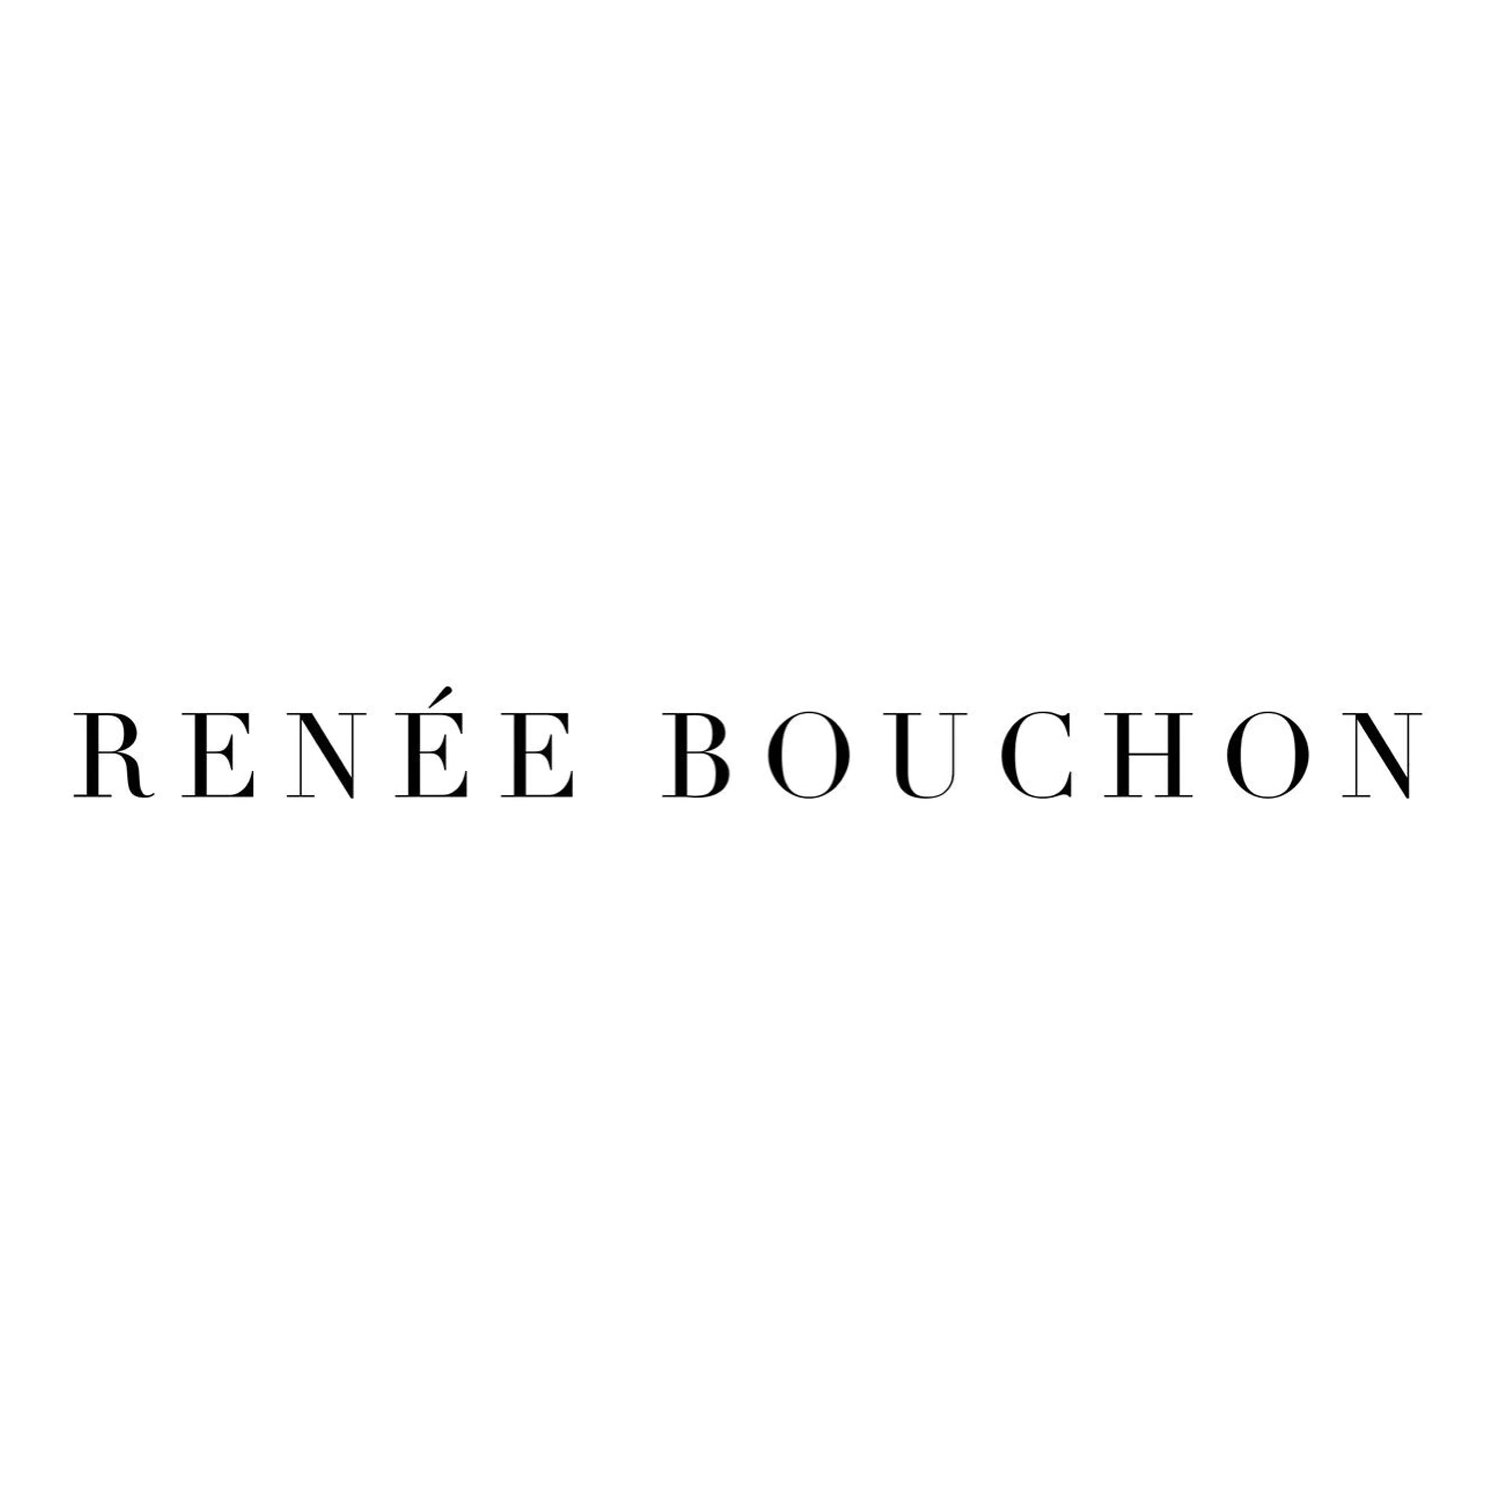 renee bouchon logo.jpg